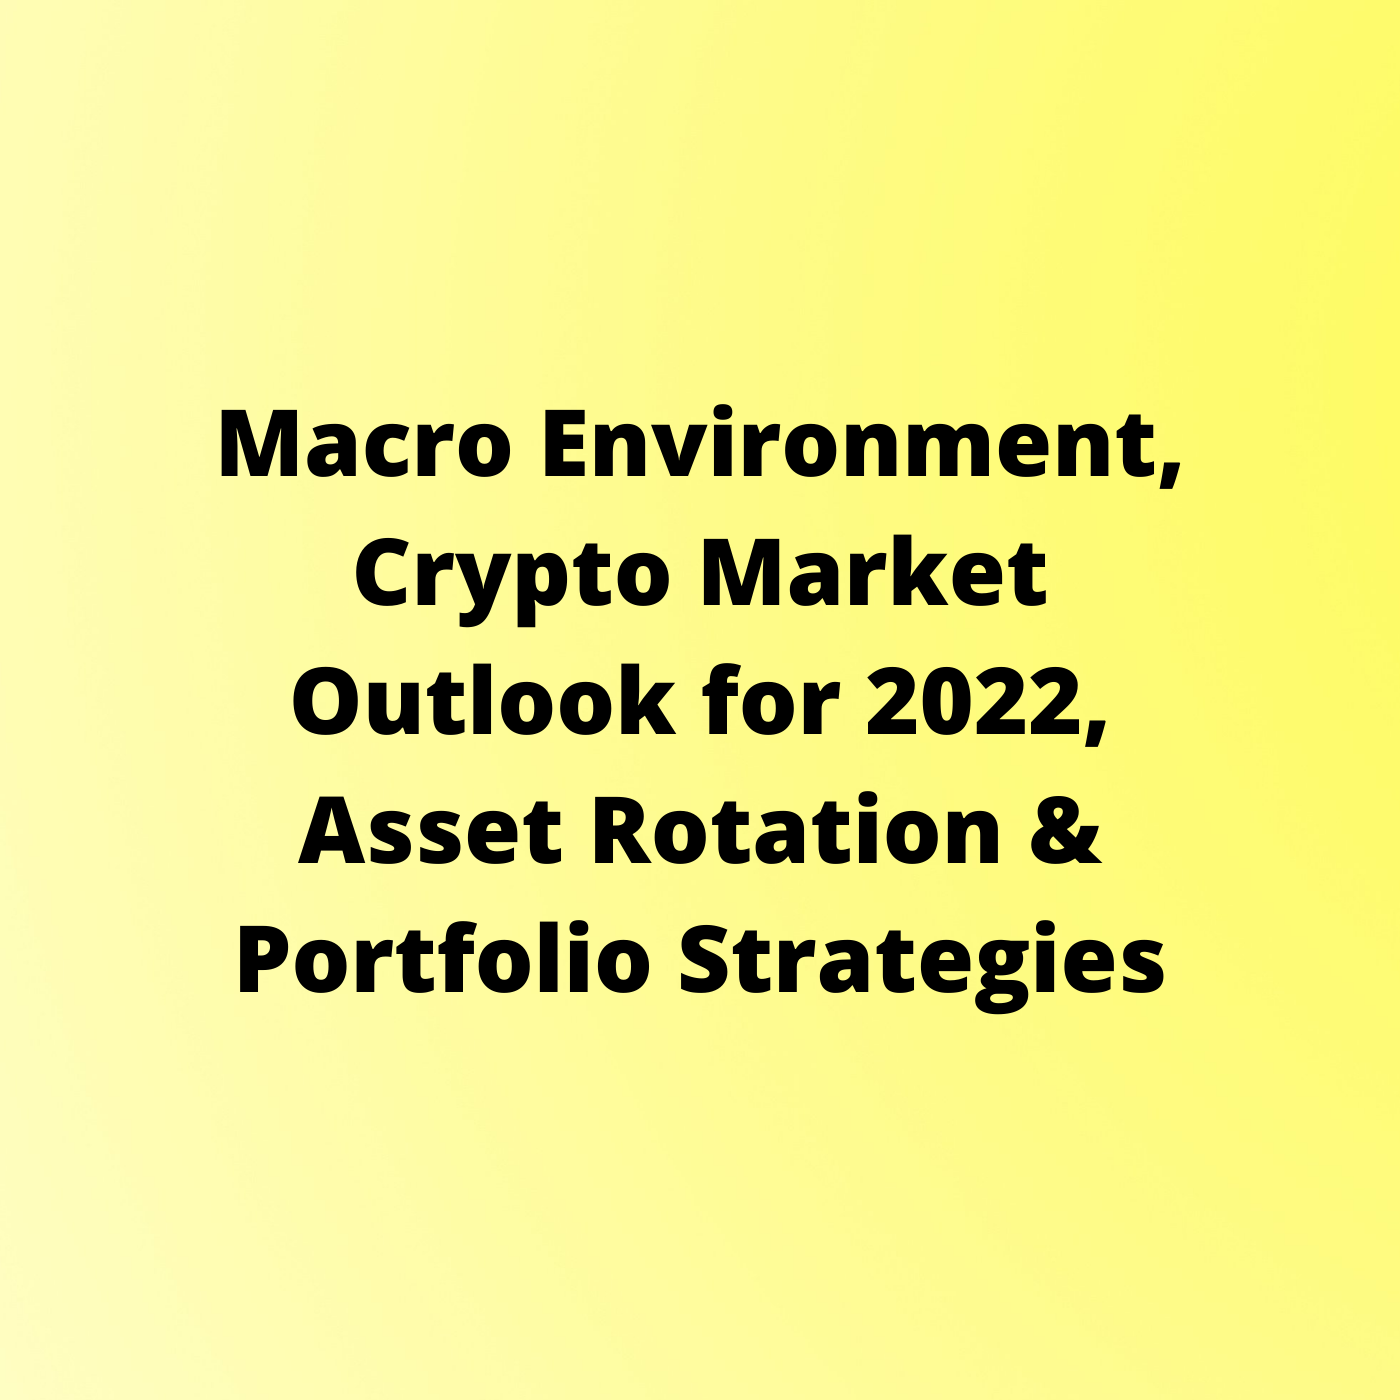 Macro Environment, Crypto Market Outlook for 2022, Asset Rotation